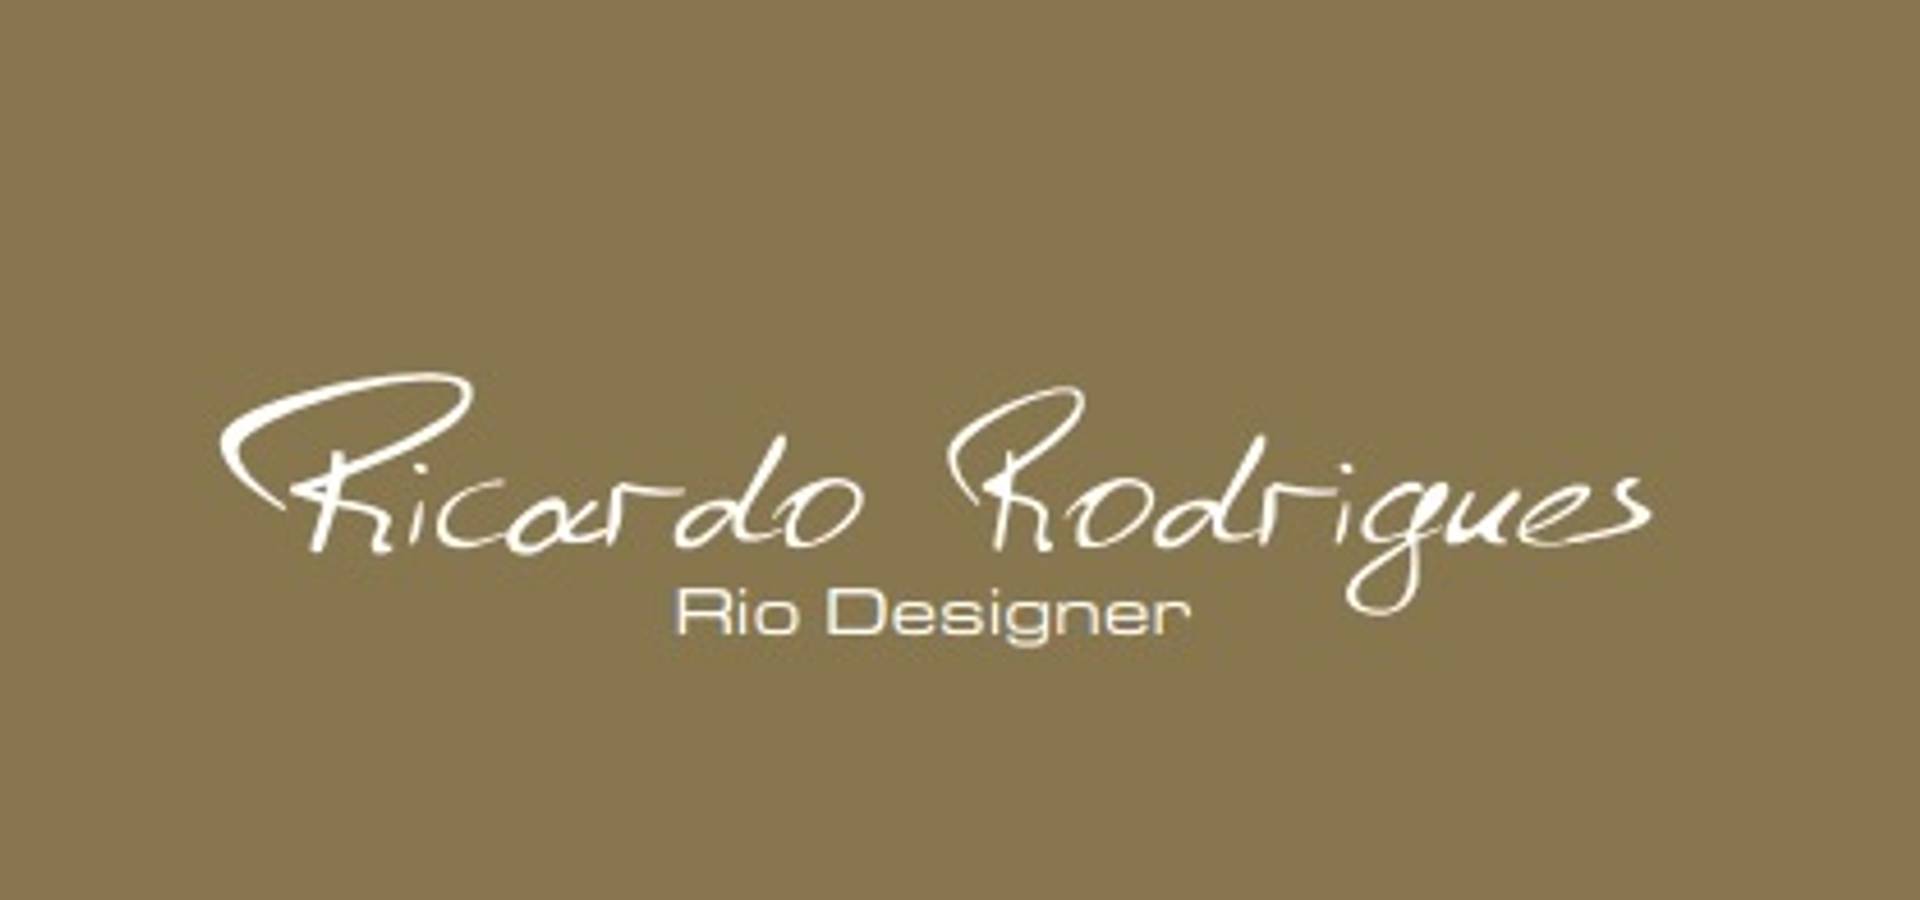 Ricardo Rodrigues – Rio Designer